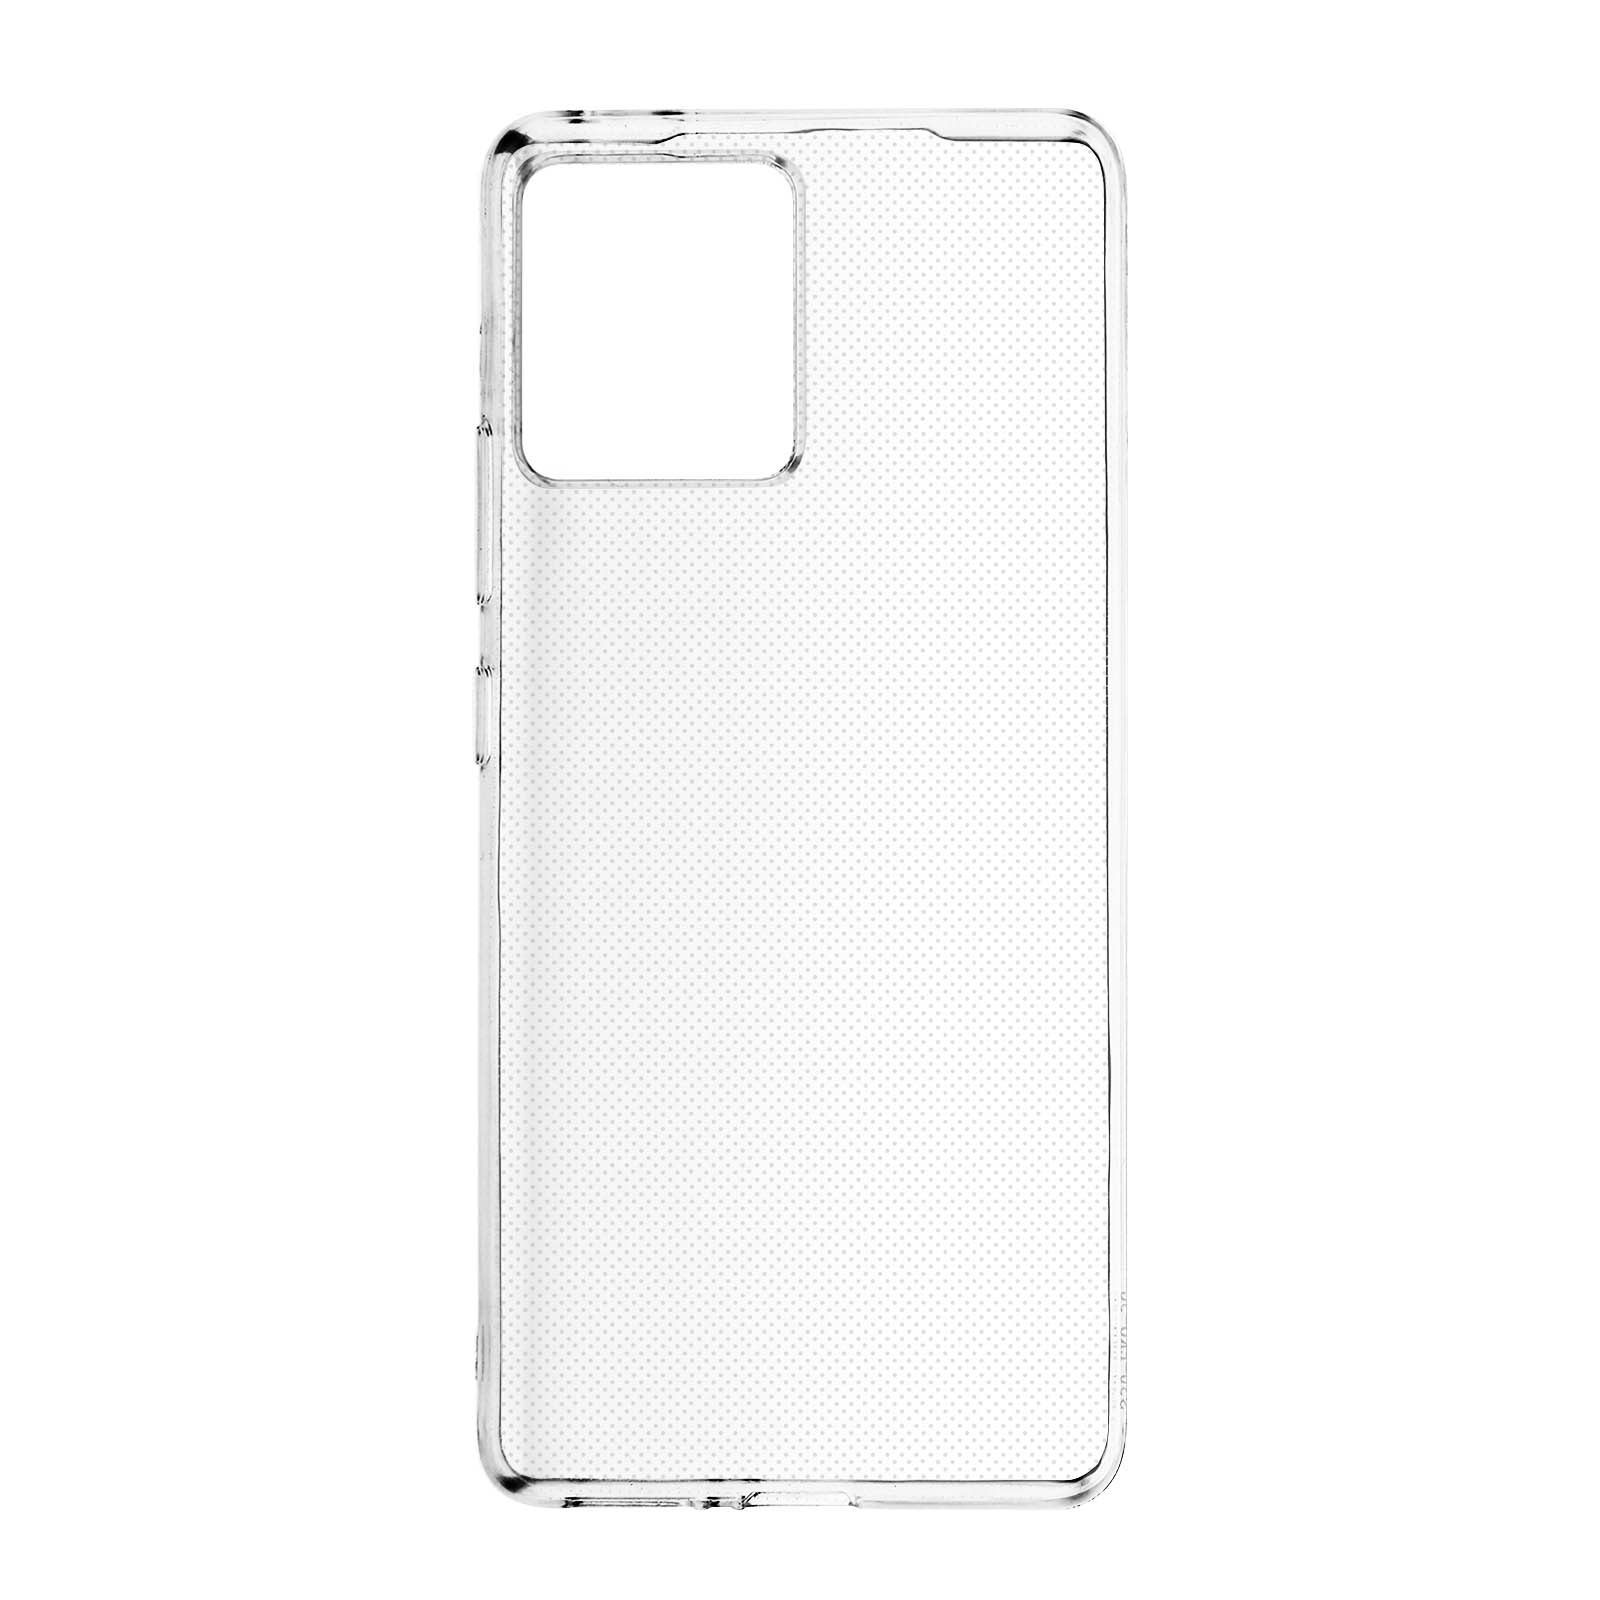 AVIZAR Transparent Edge Fusion, Backcover, 30 Motorola, Skin Series,